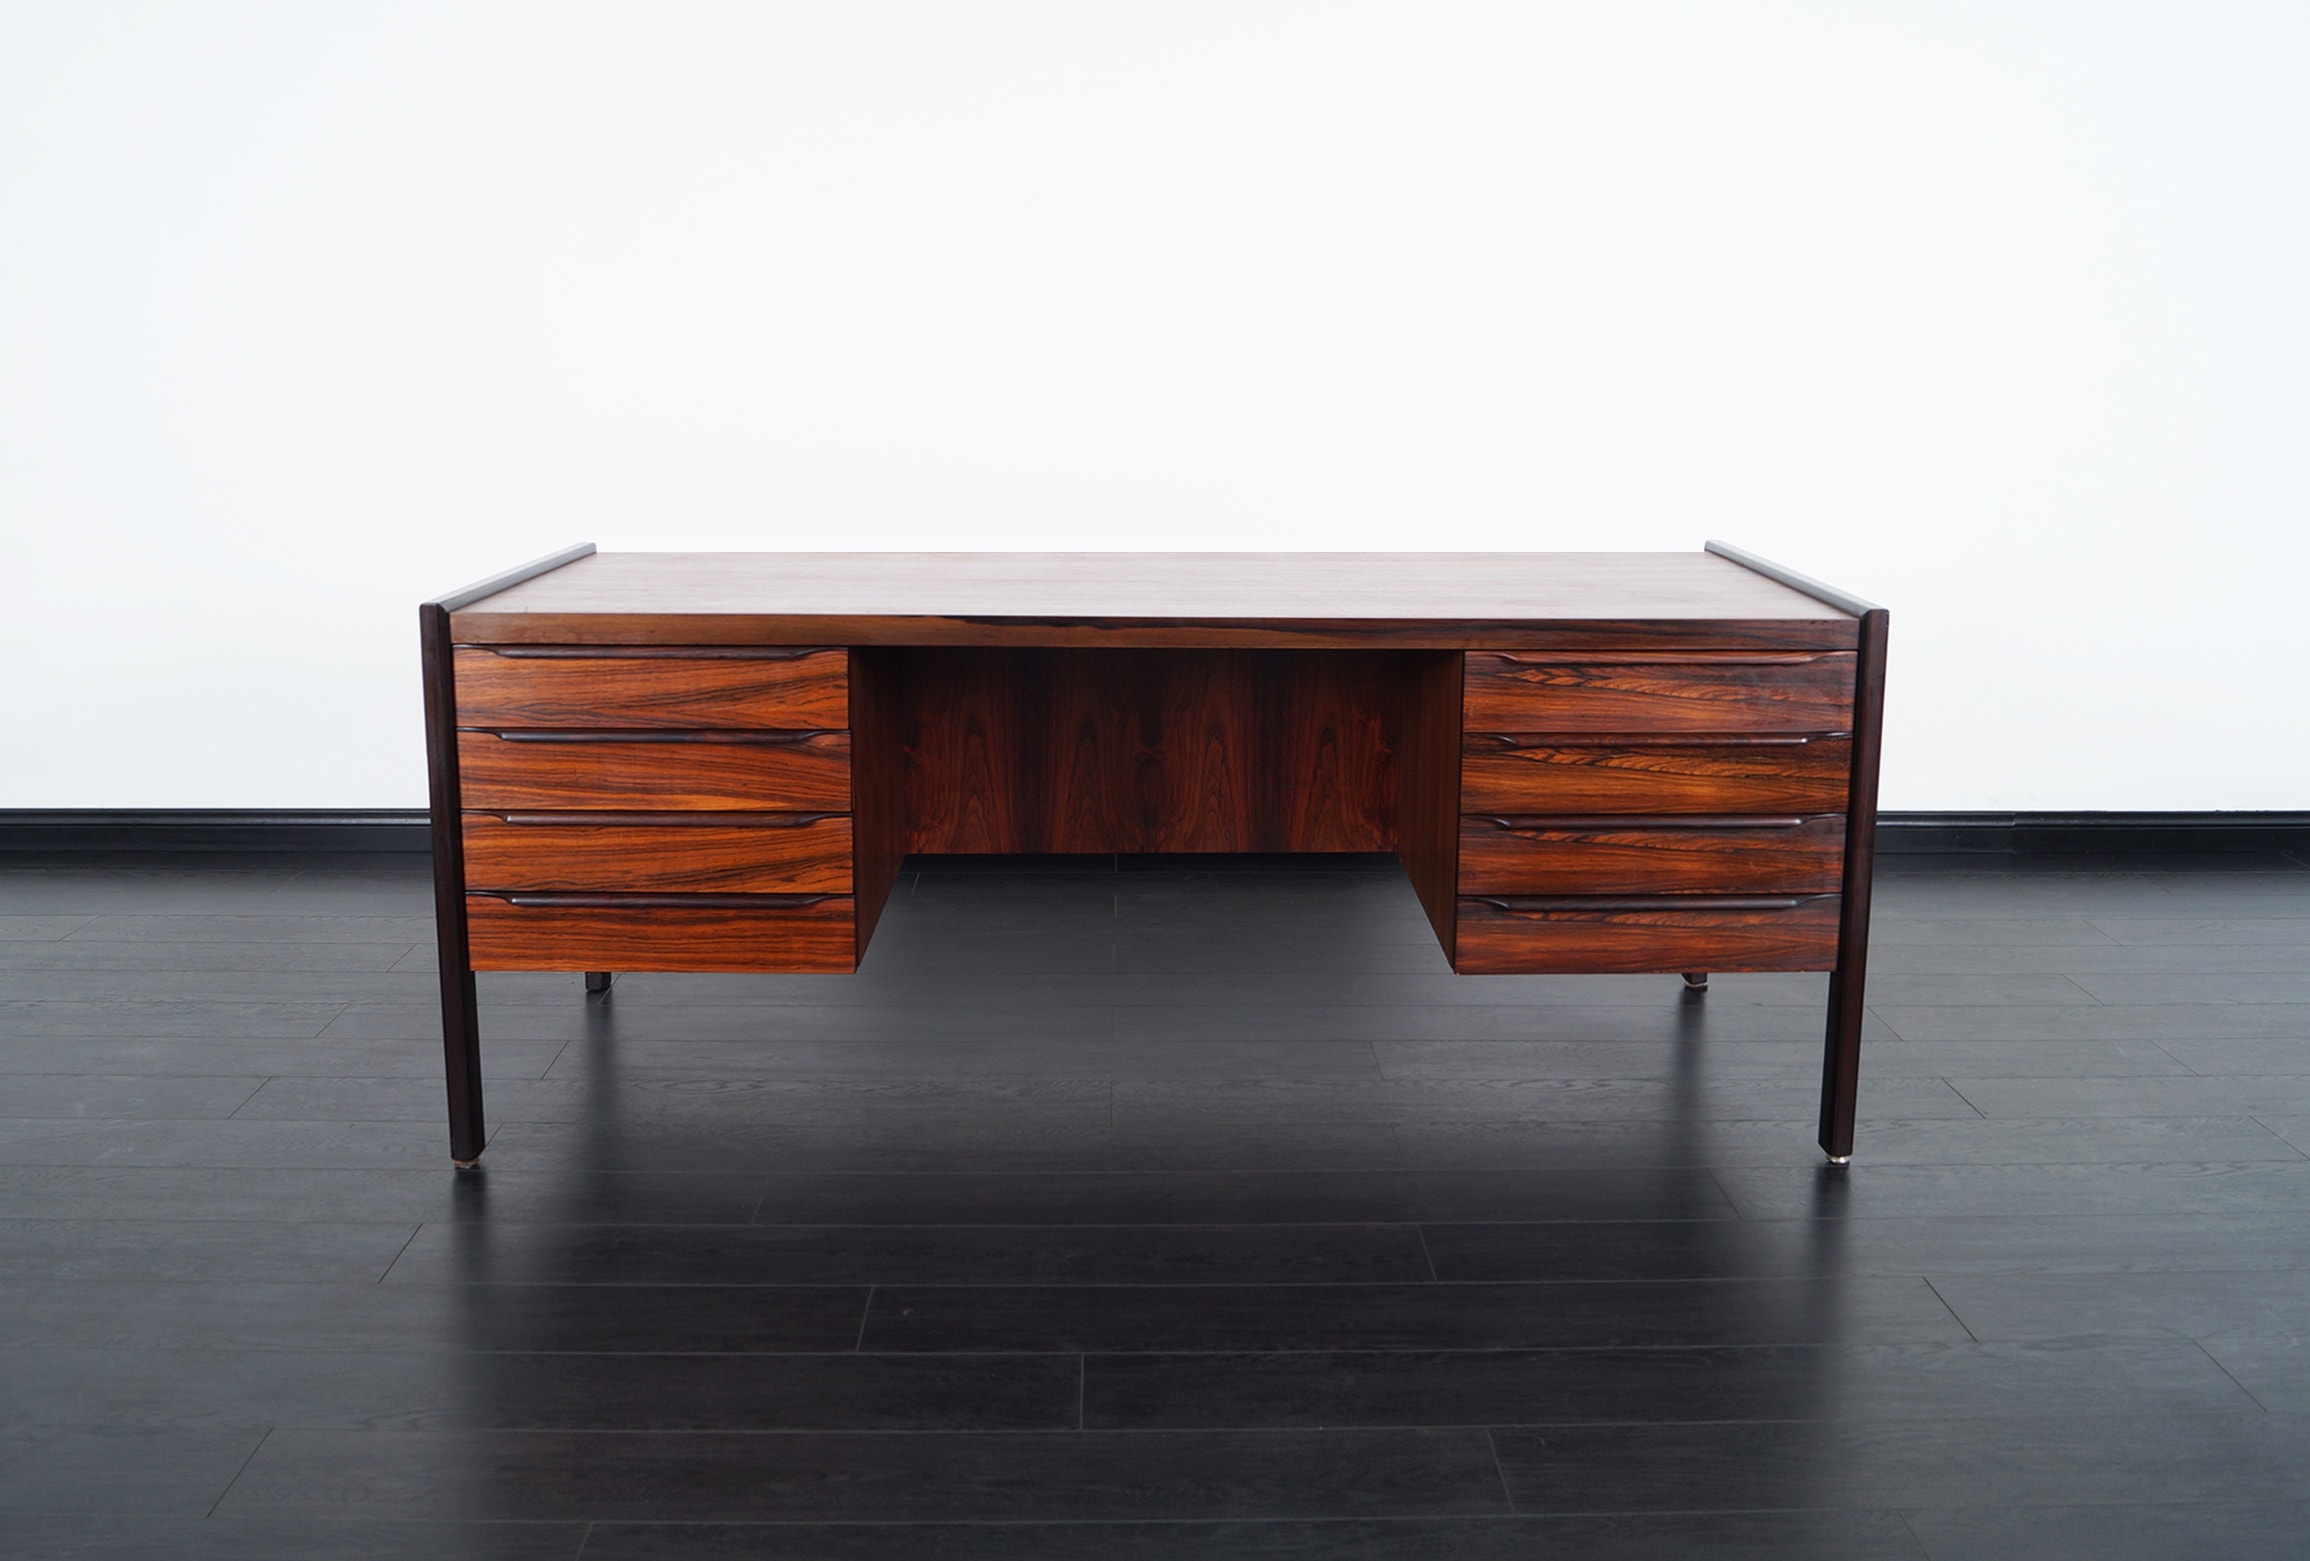 Danish Modern Rosewood Desk